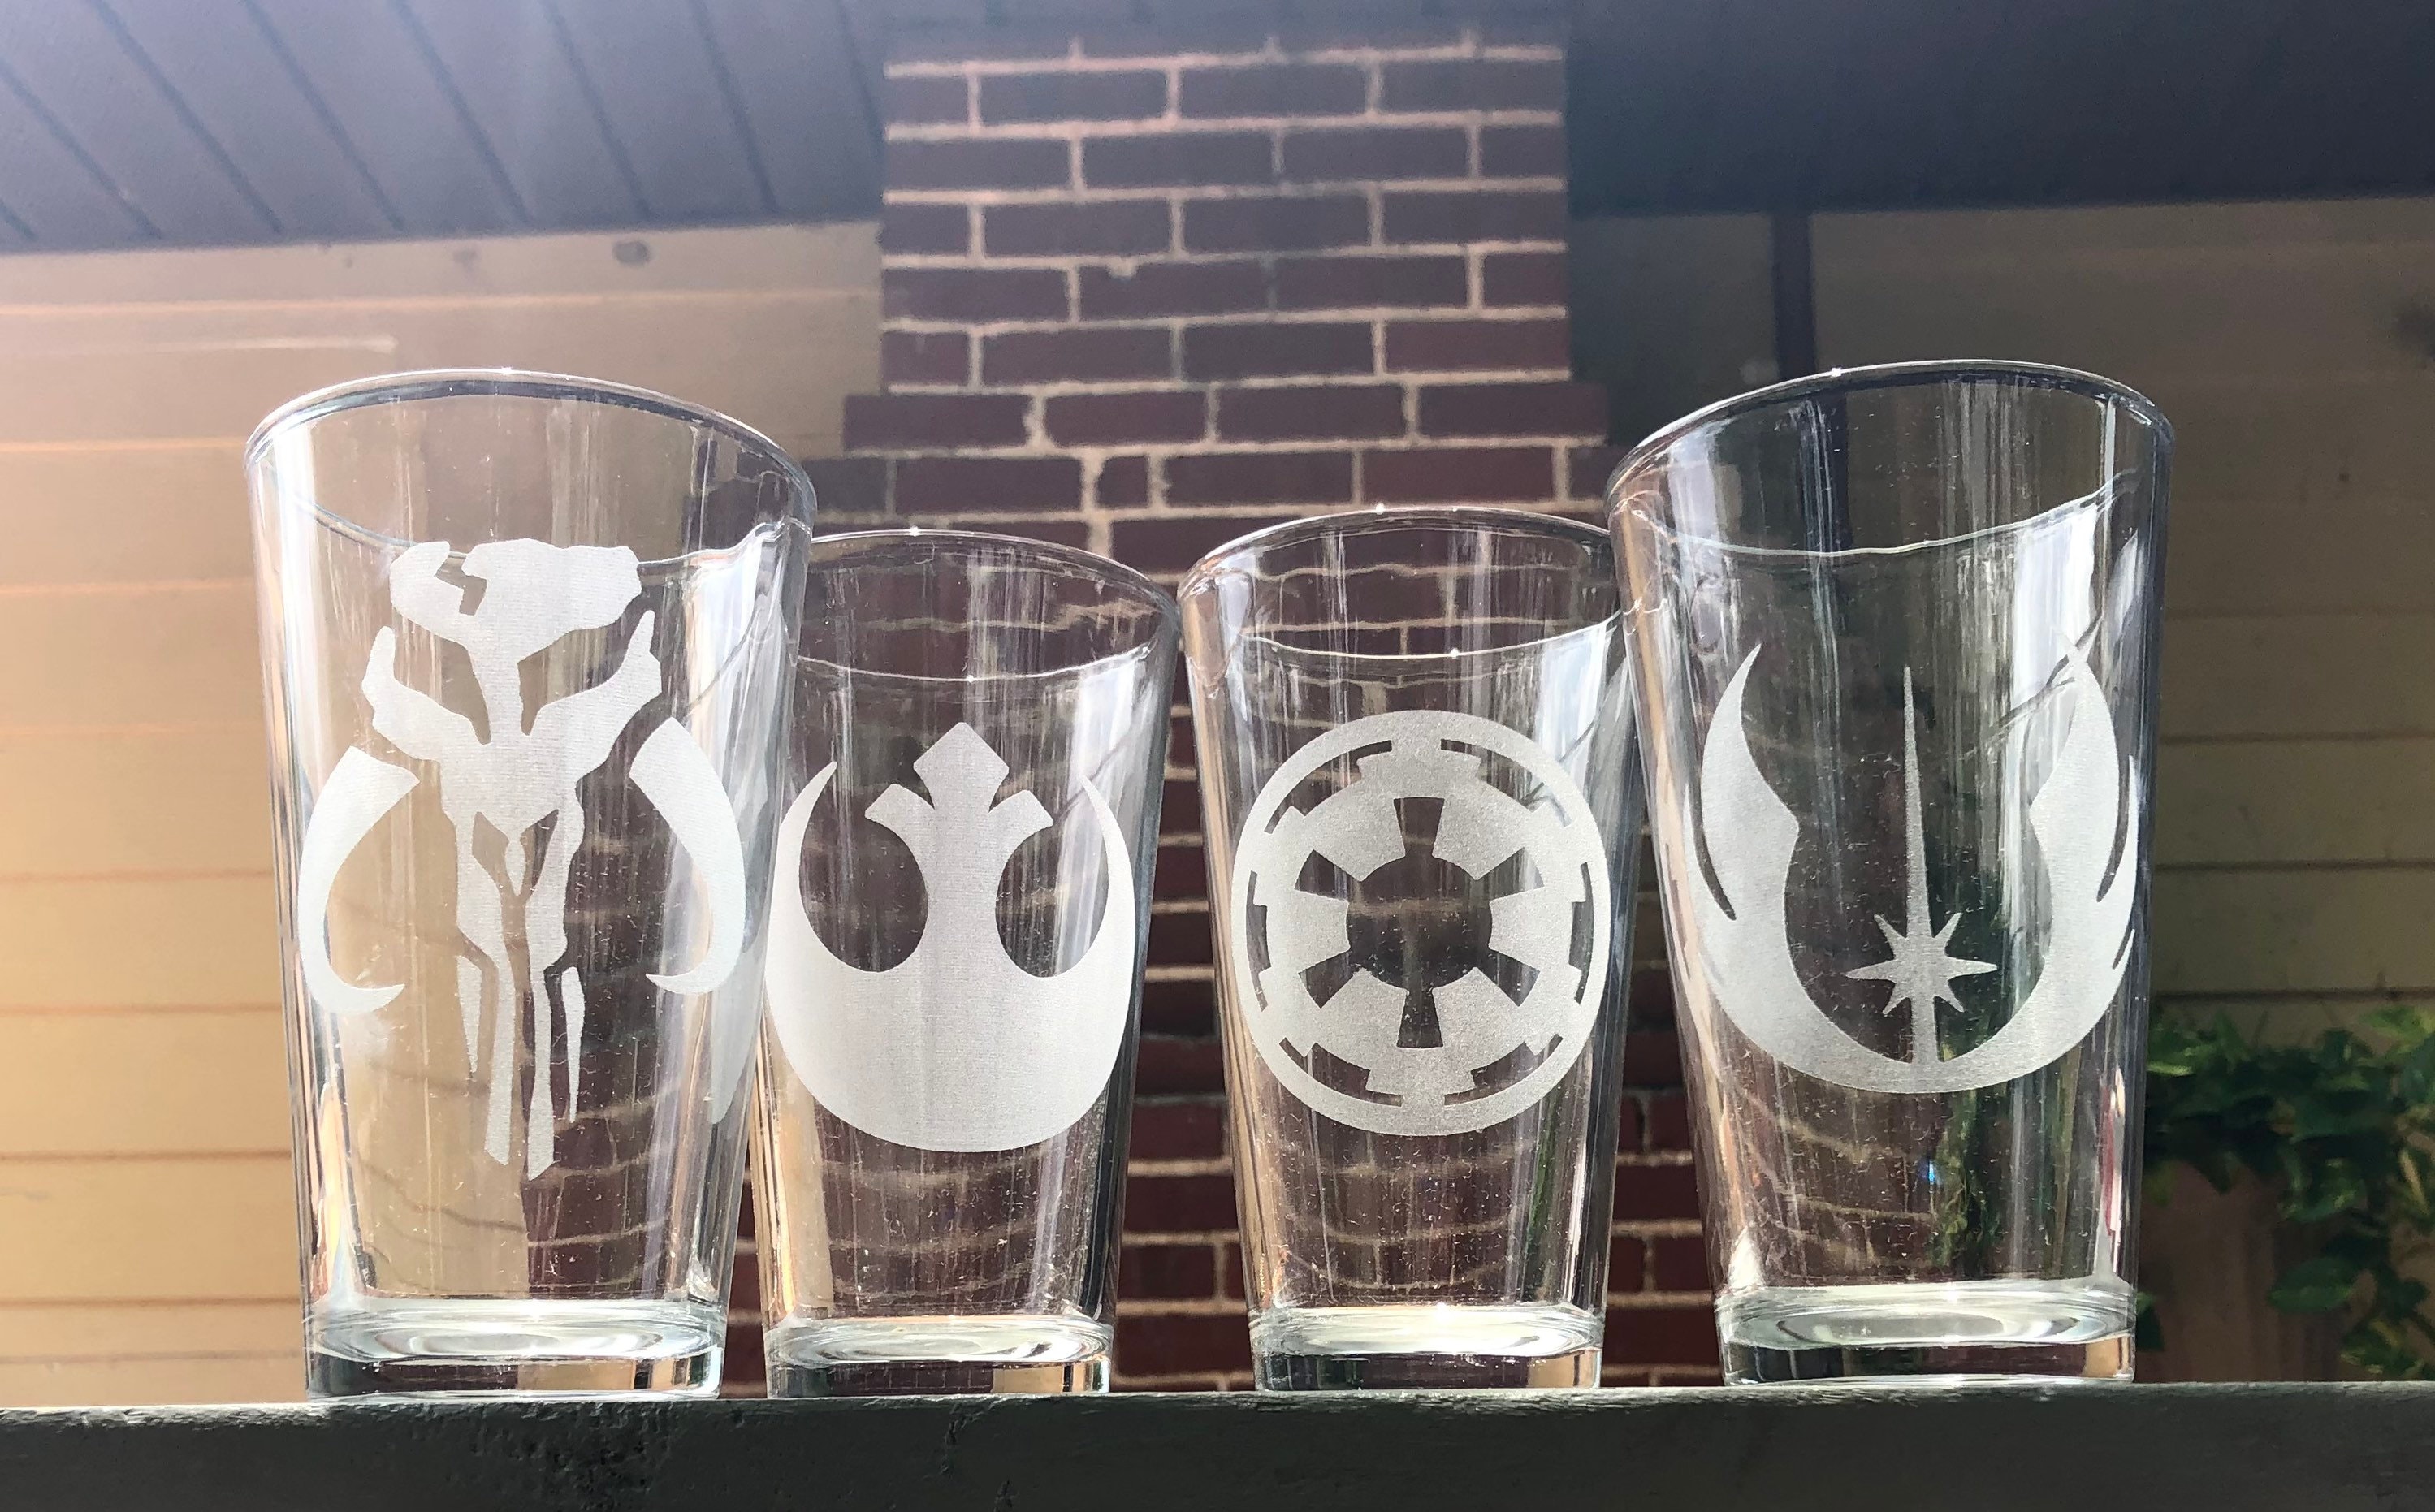 Star Wars Celebration Orlando 2017, Set of 4 Pint Glasses - Unused